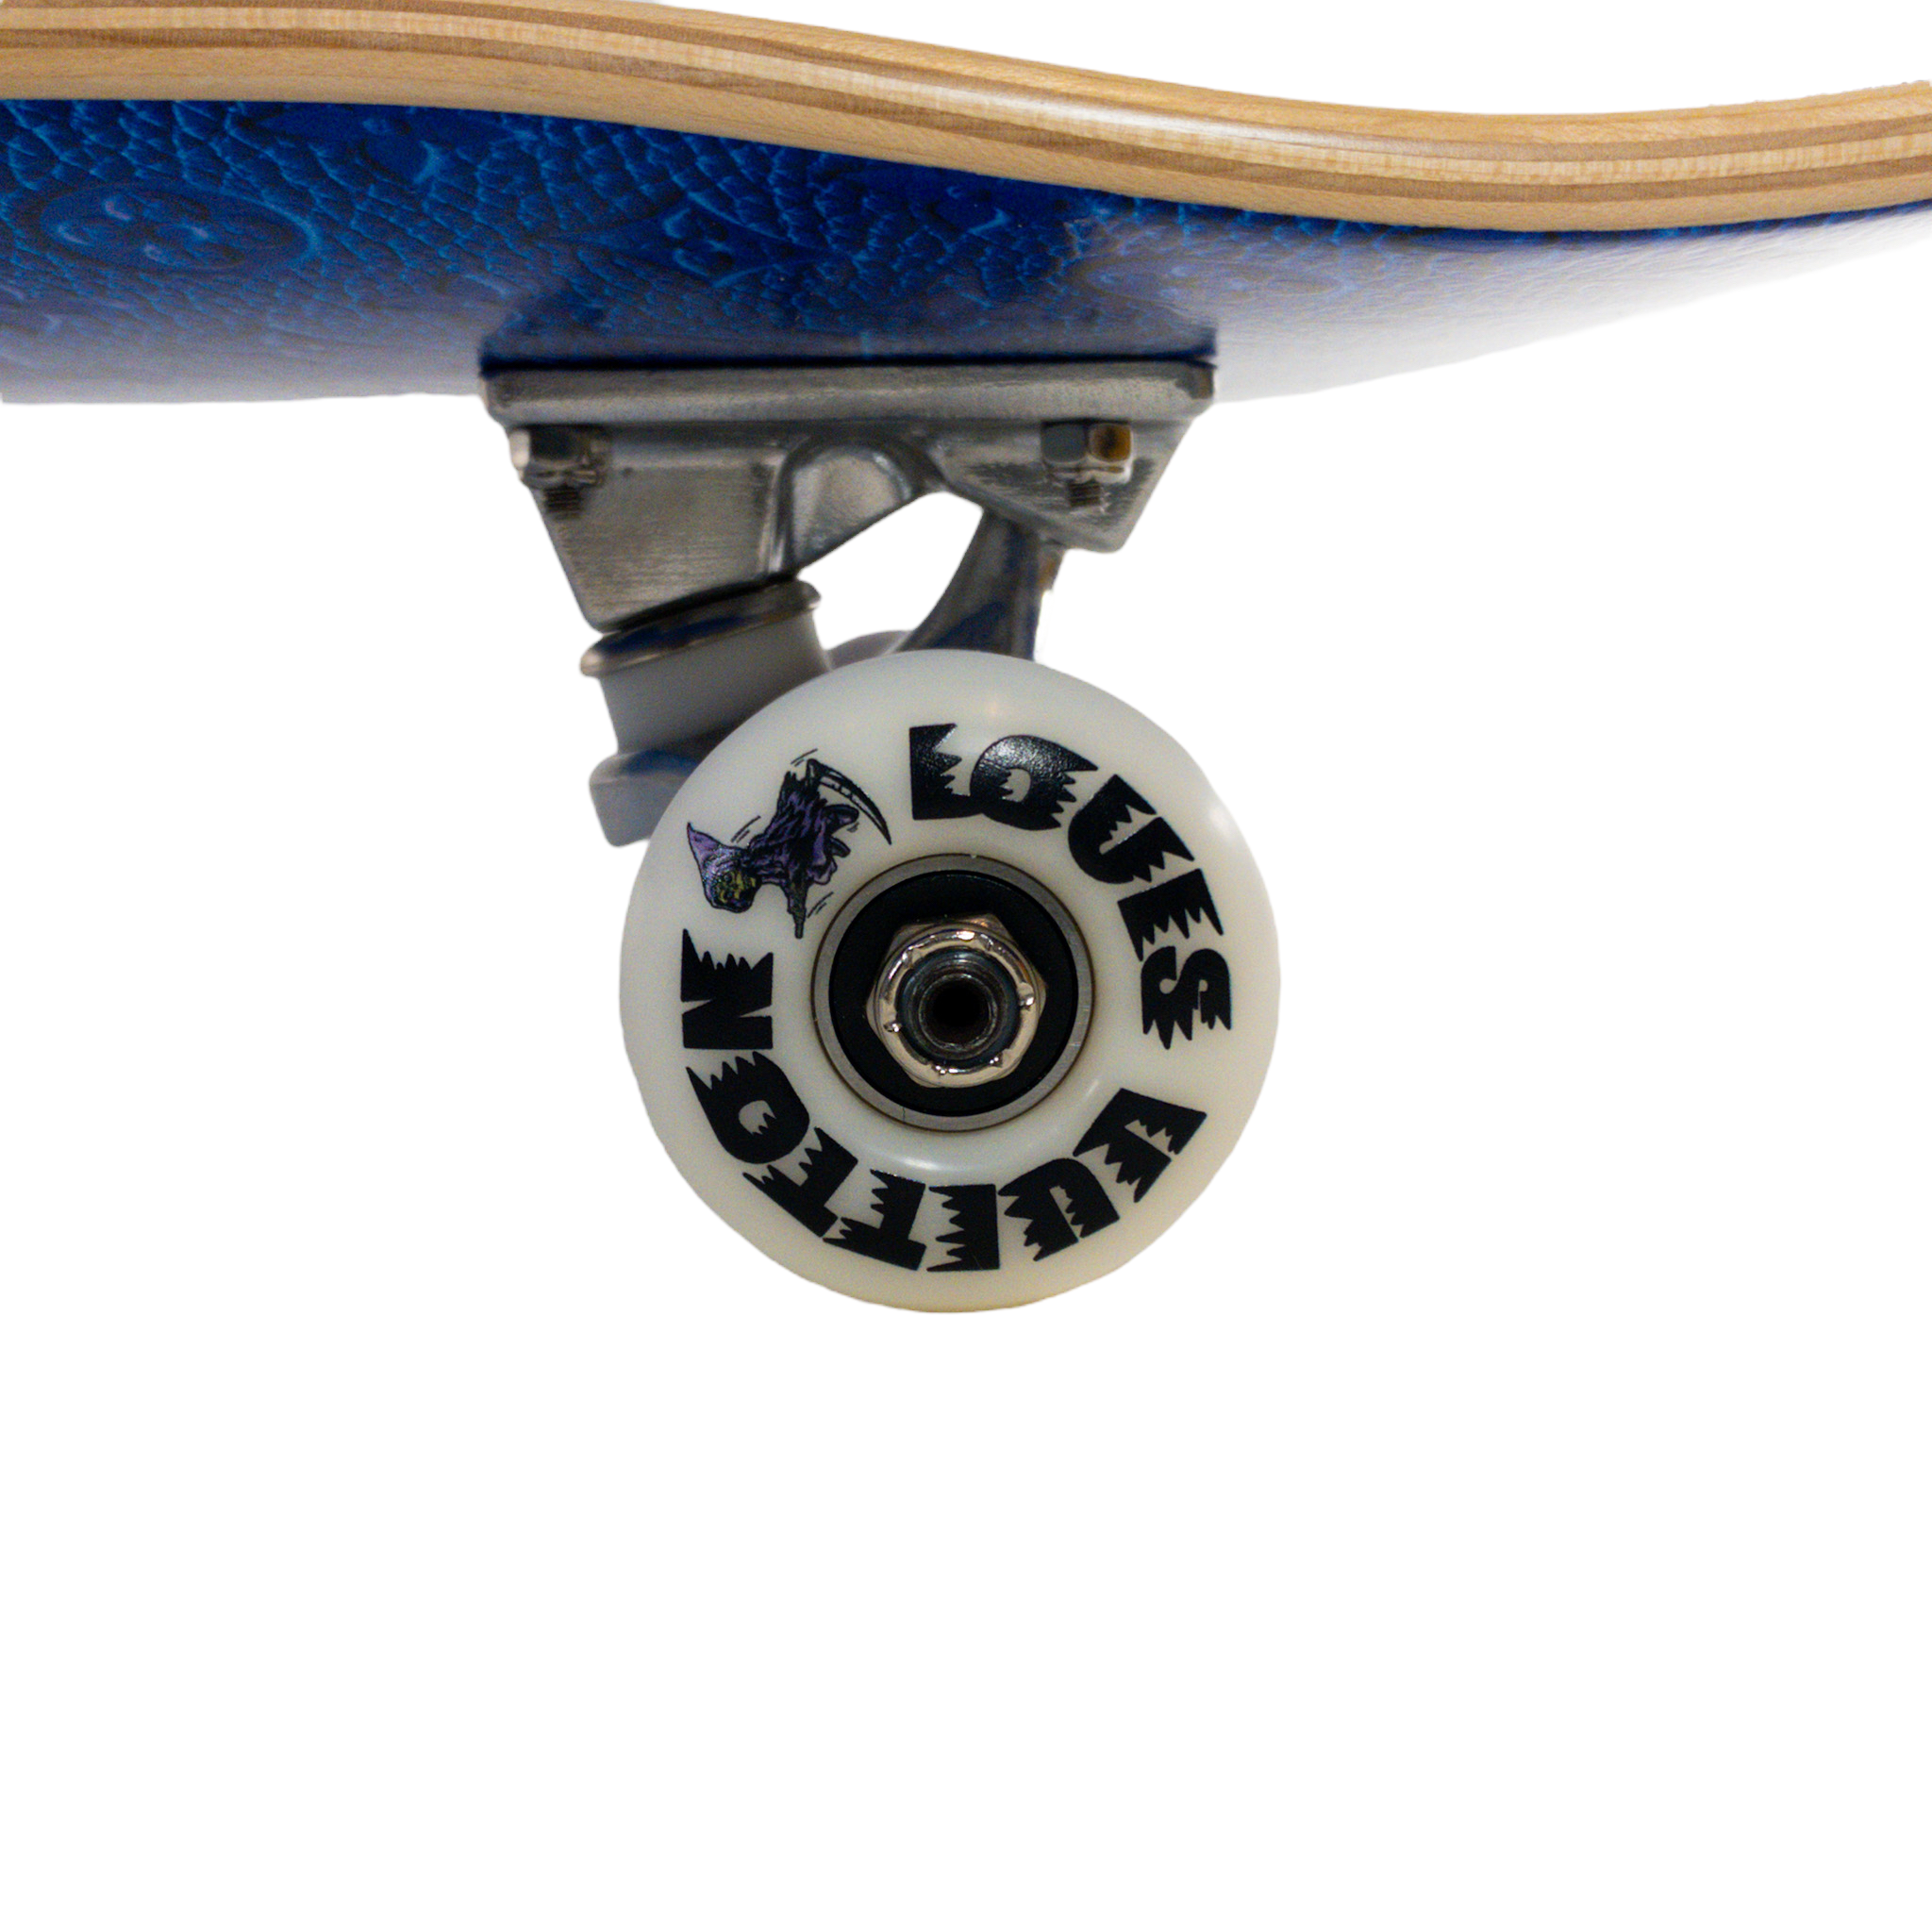 Virgil Abloh's stunning Louis Vuitton skateboard set costs nearly